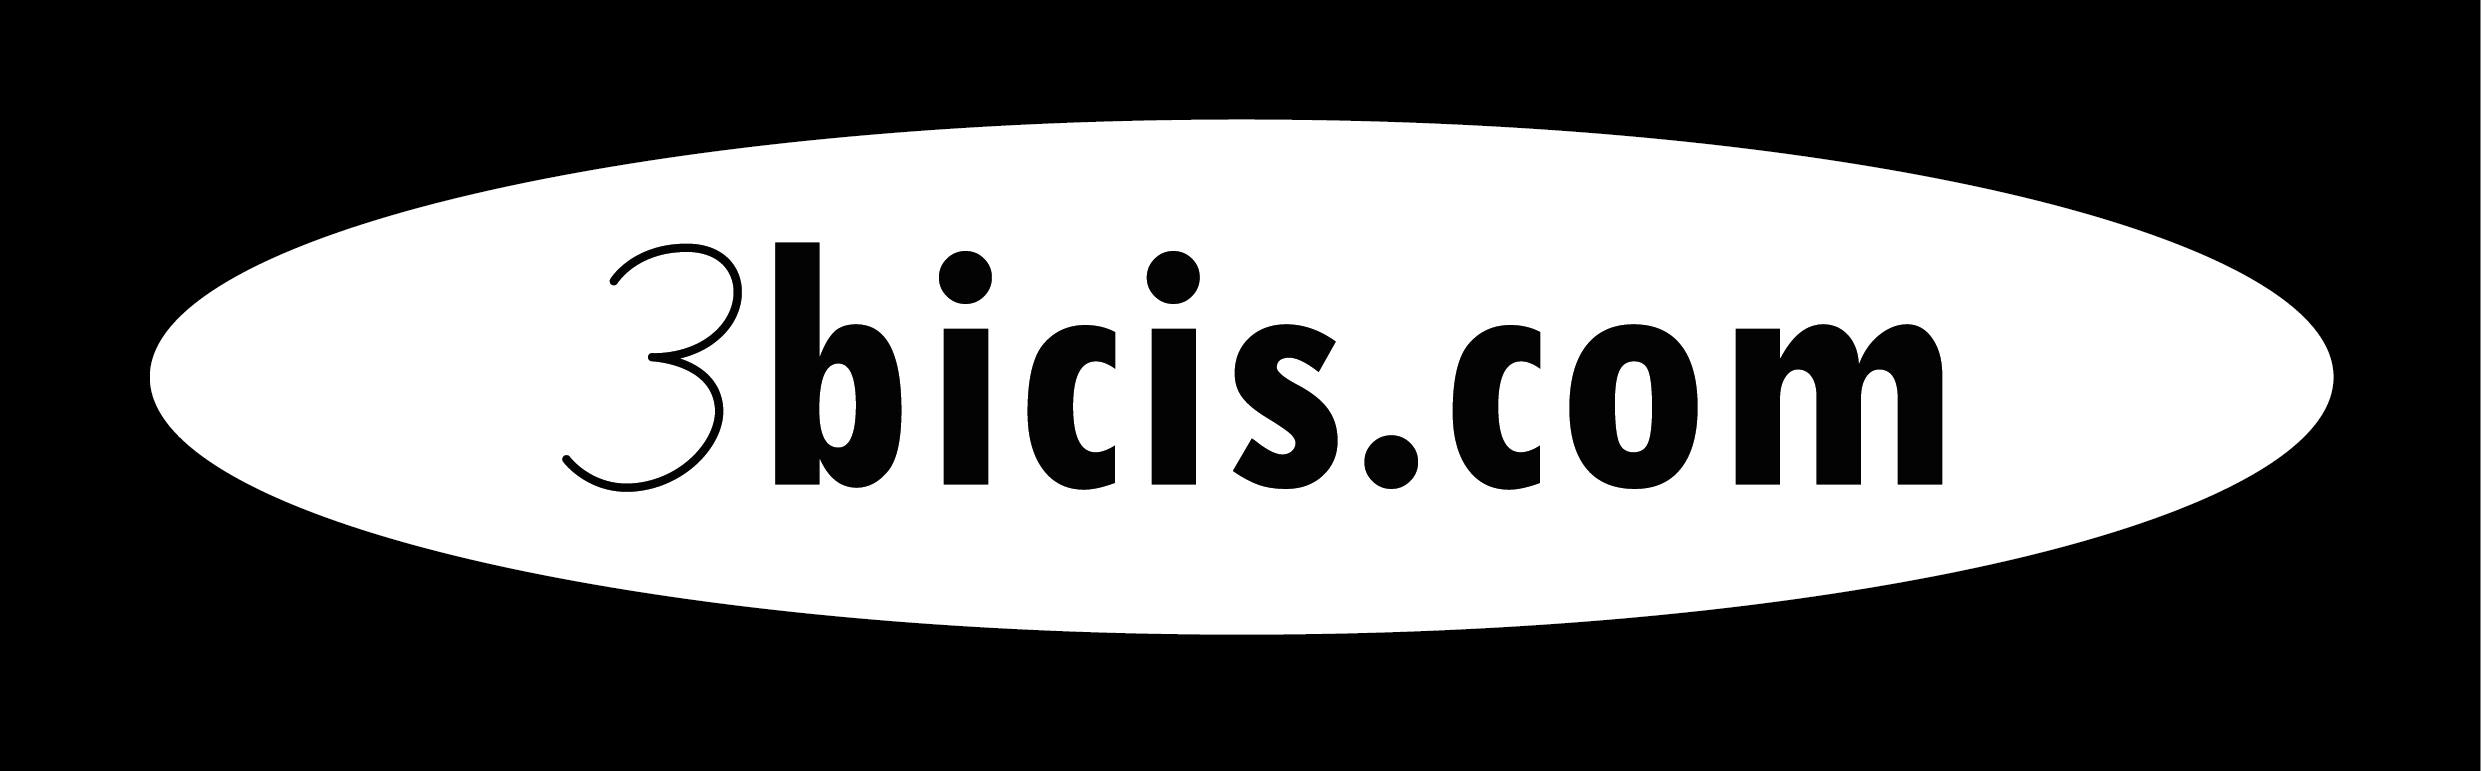 3bicis.com - bikes & sports